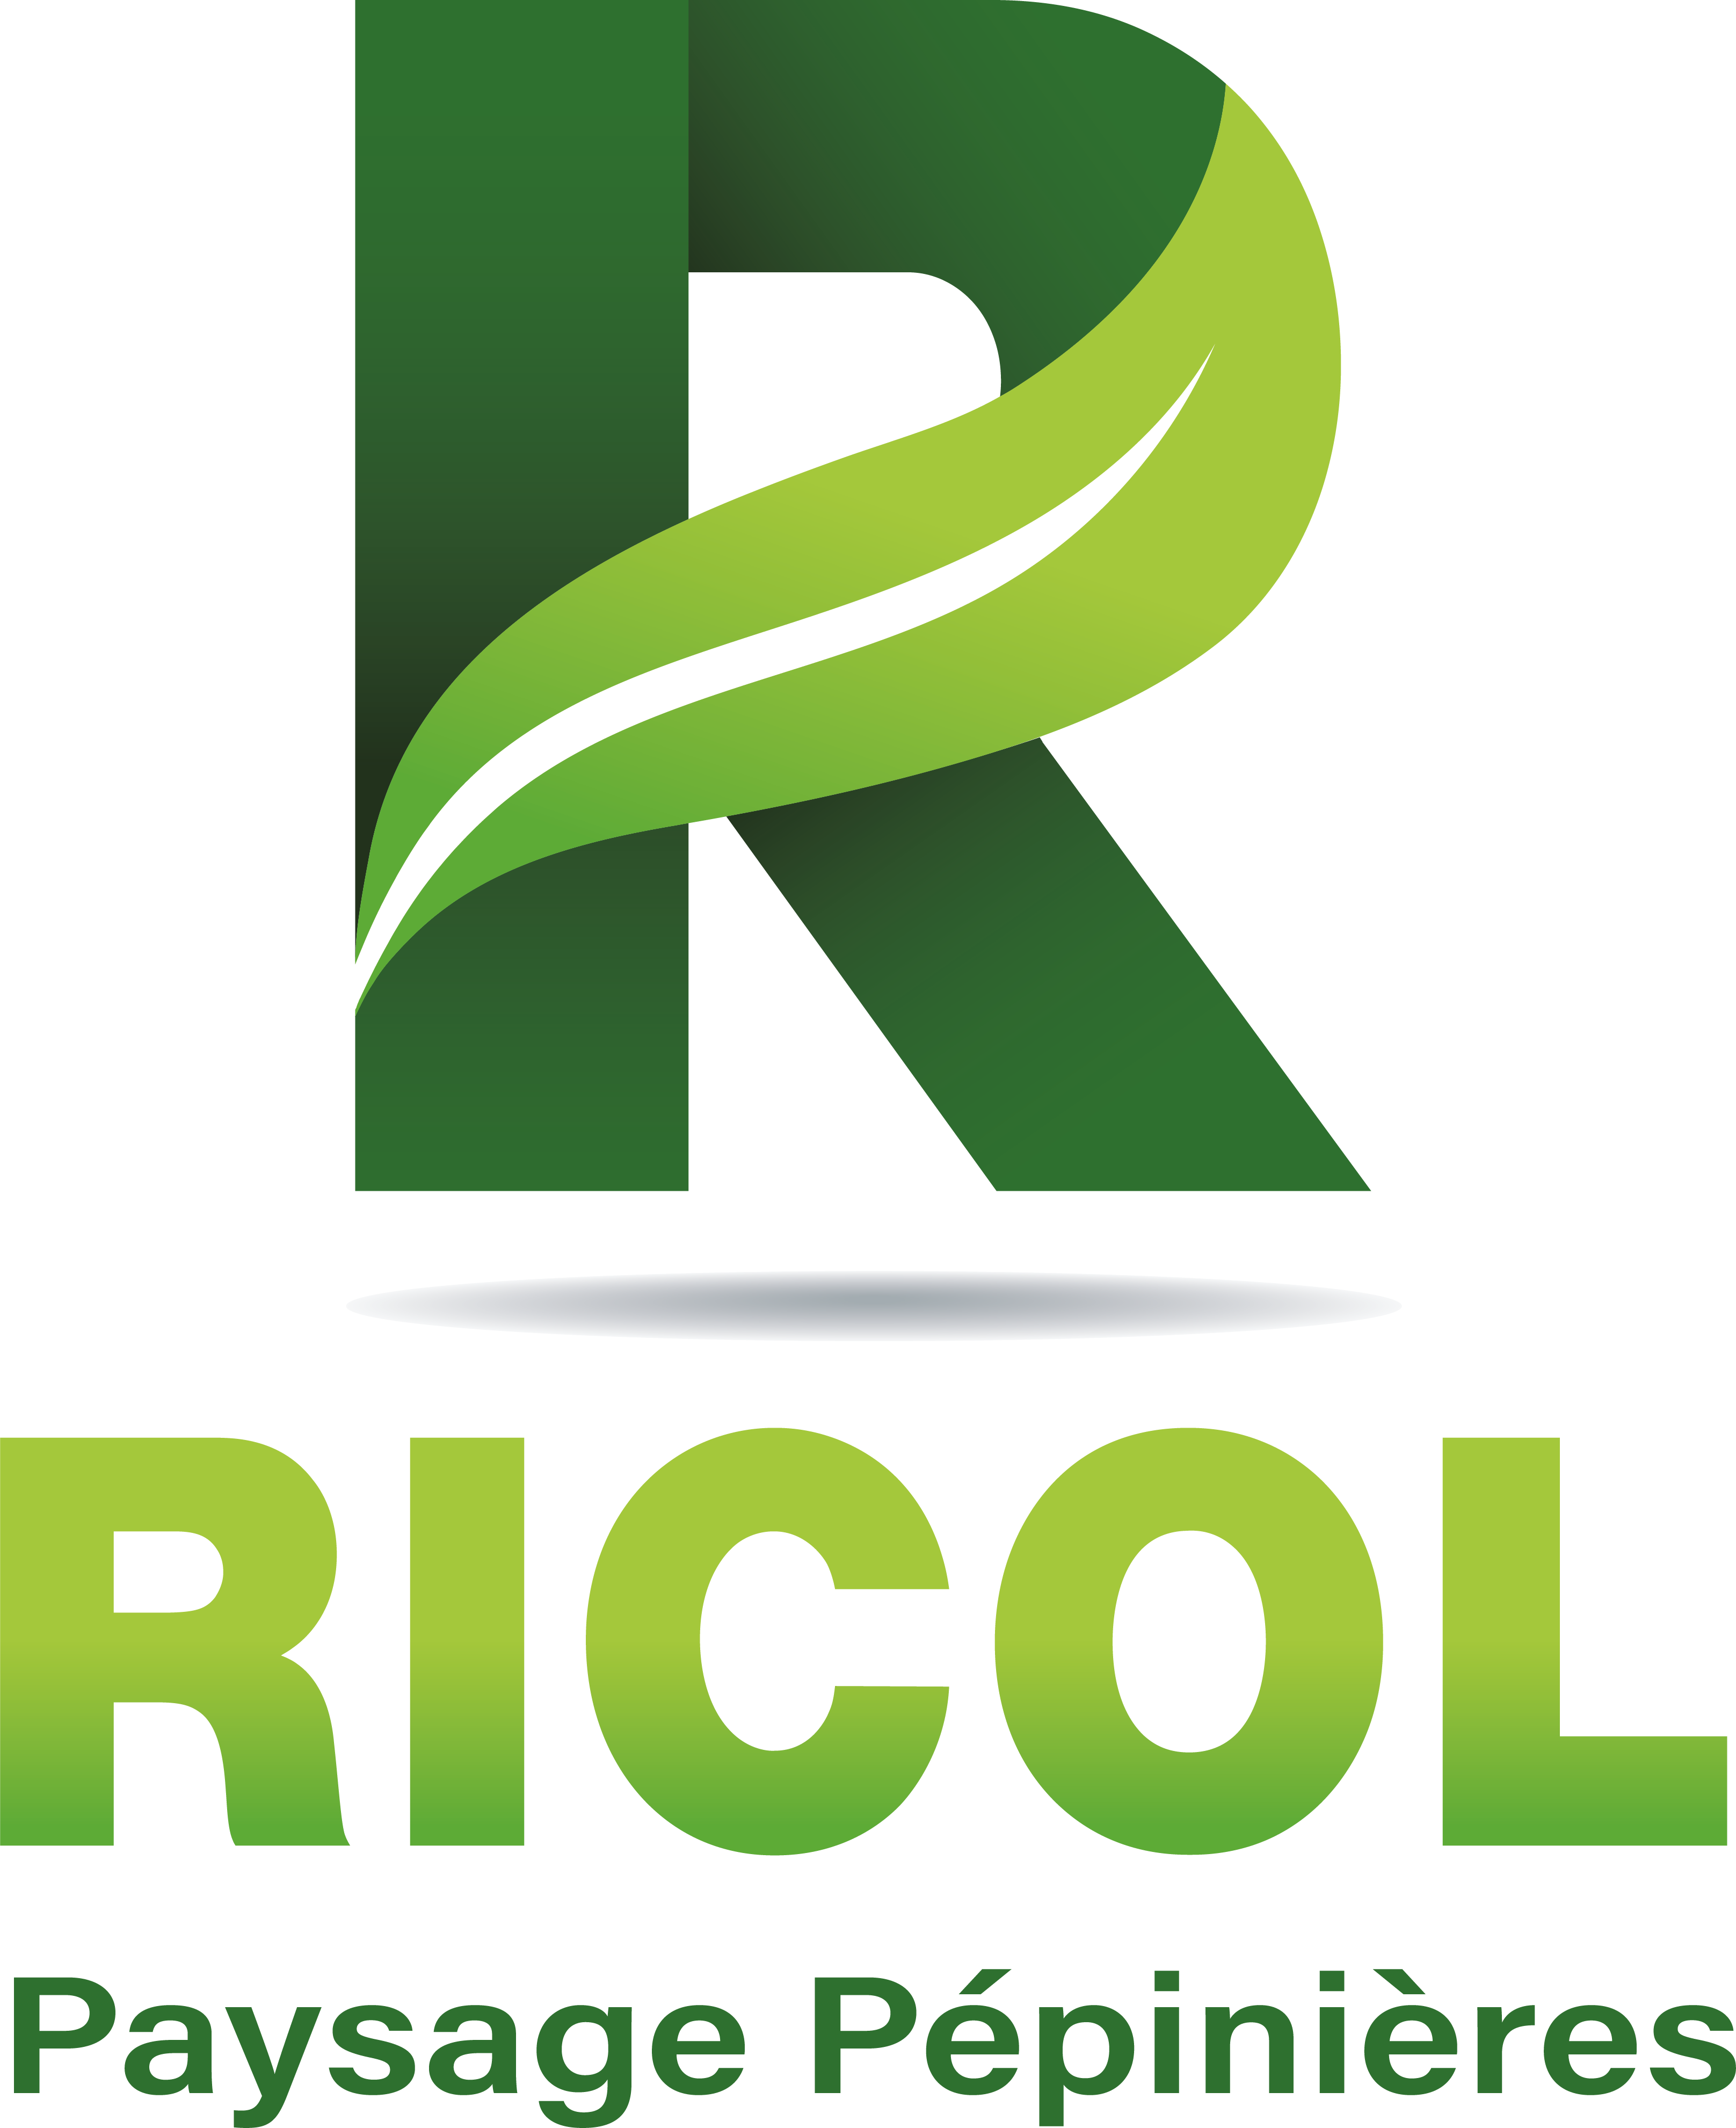 Ricol pépinière, Macon, maintenance of green spaces 